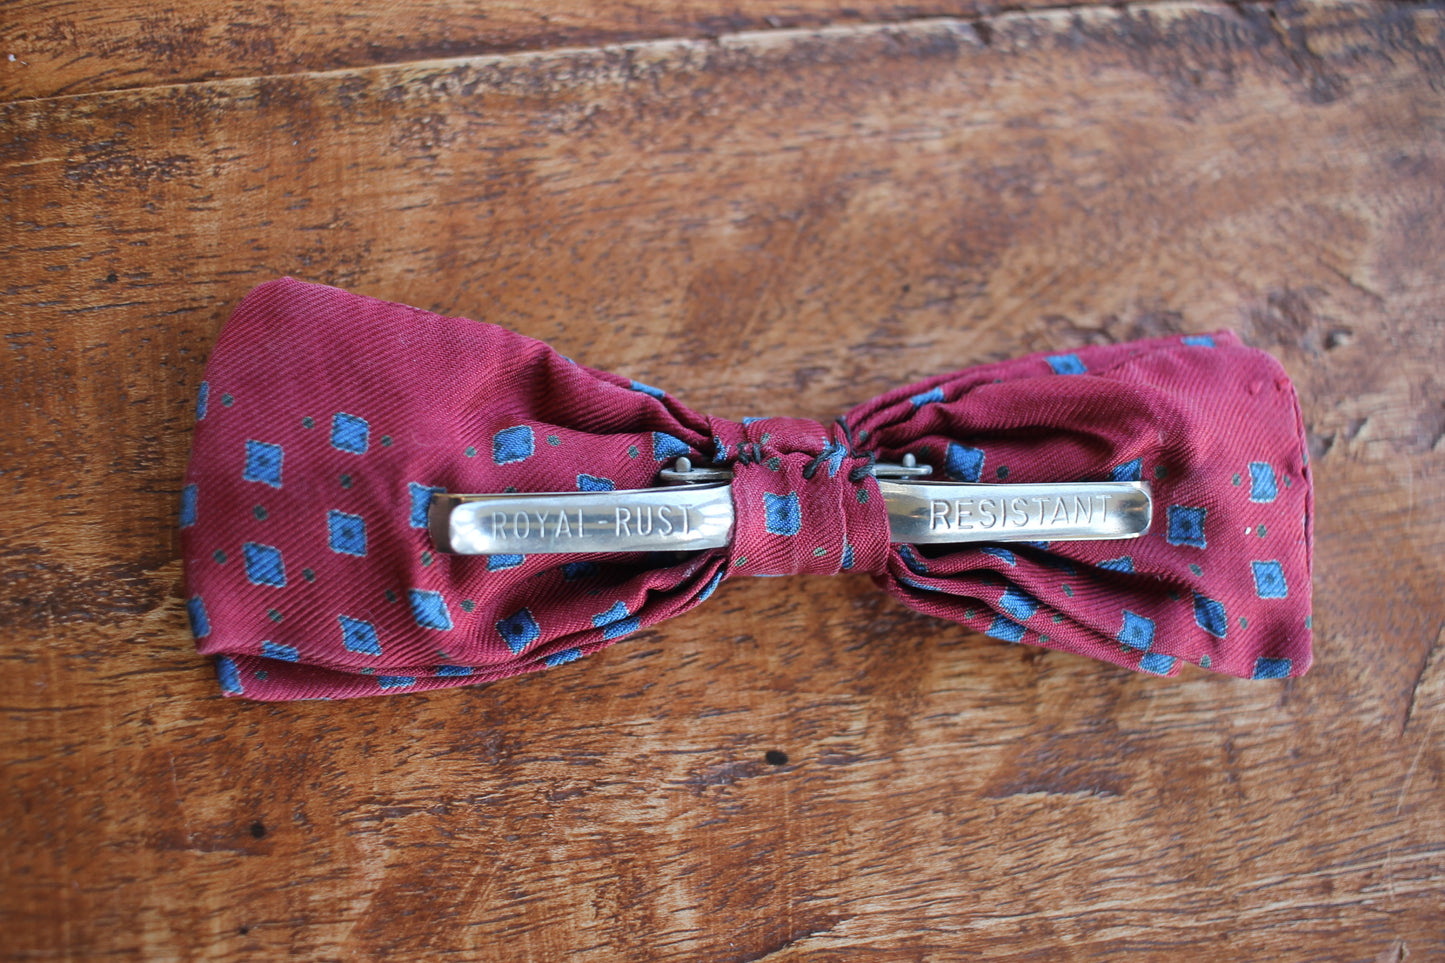 Vintage pre-tied clip on dark red blue squares pattern bow tie